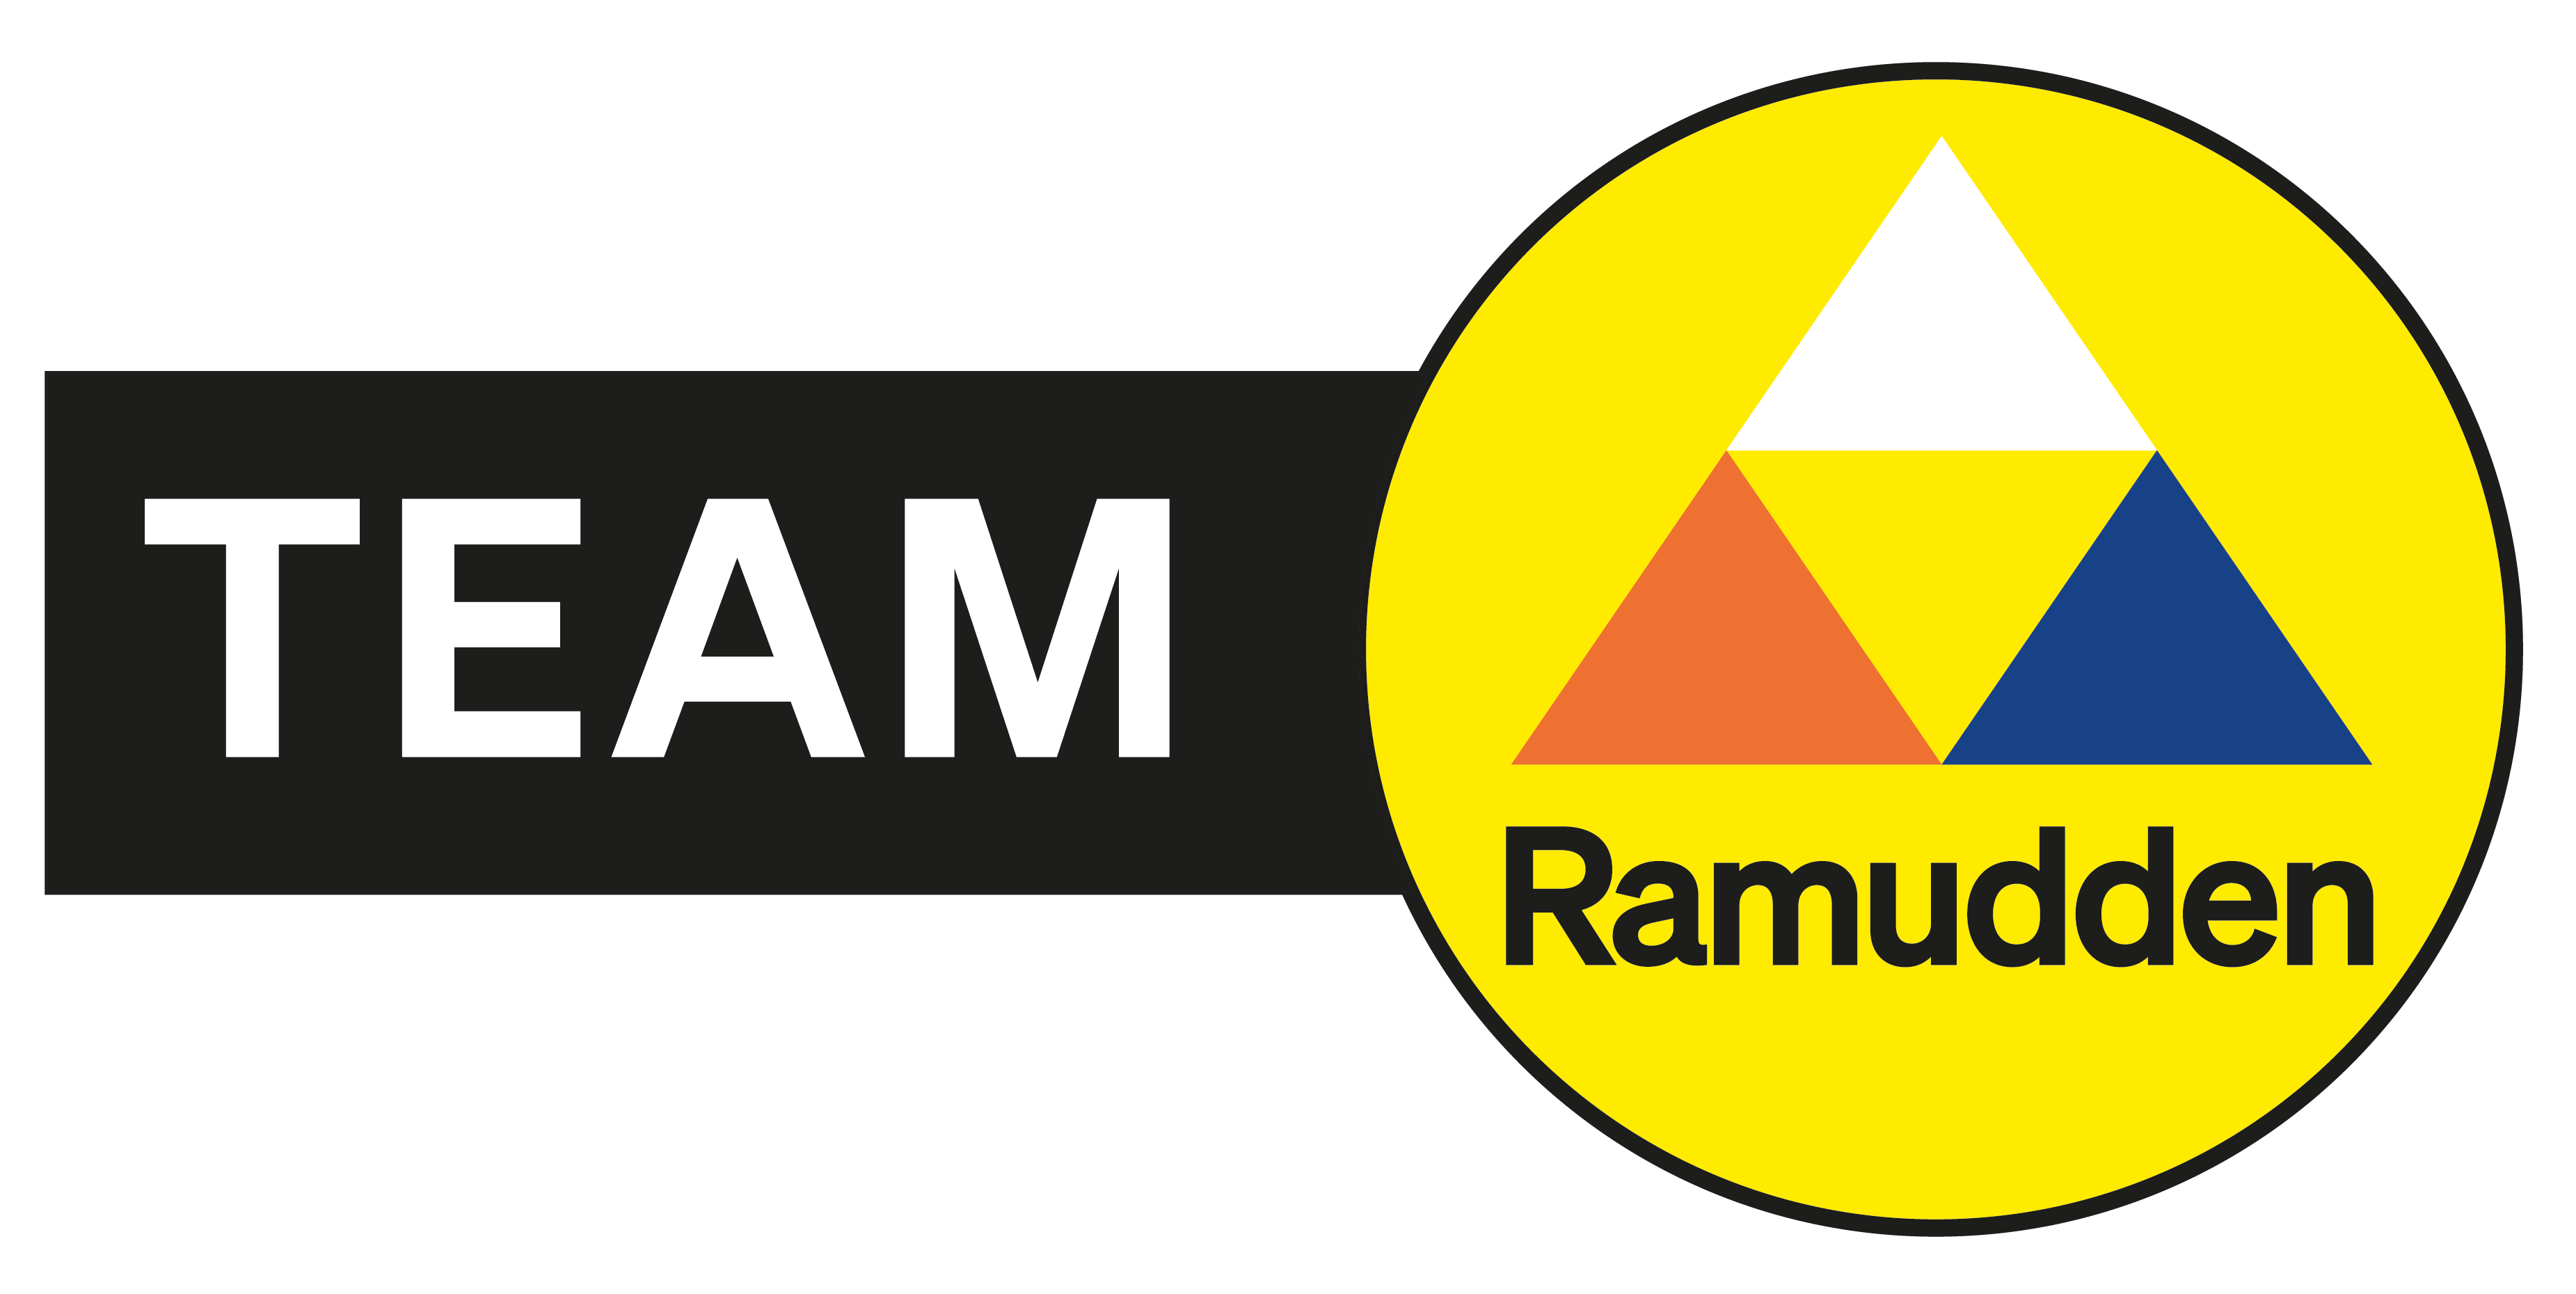 Team Ramudden logo